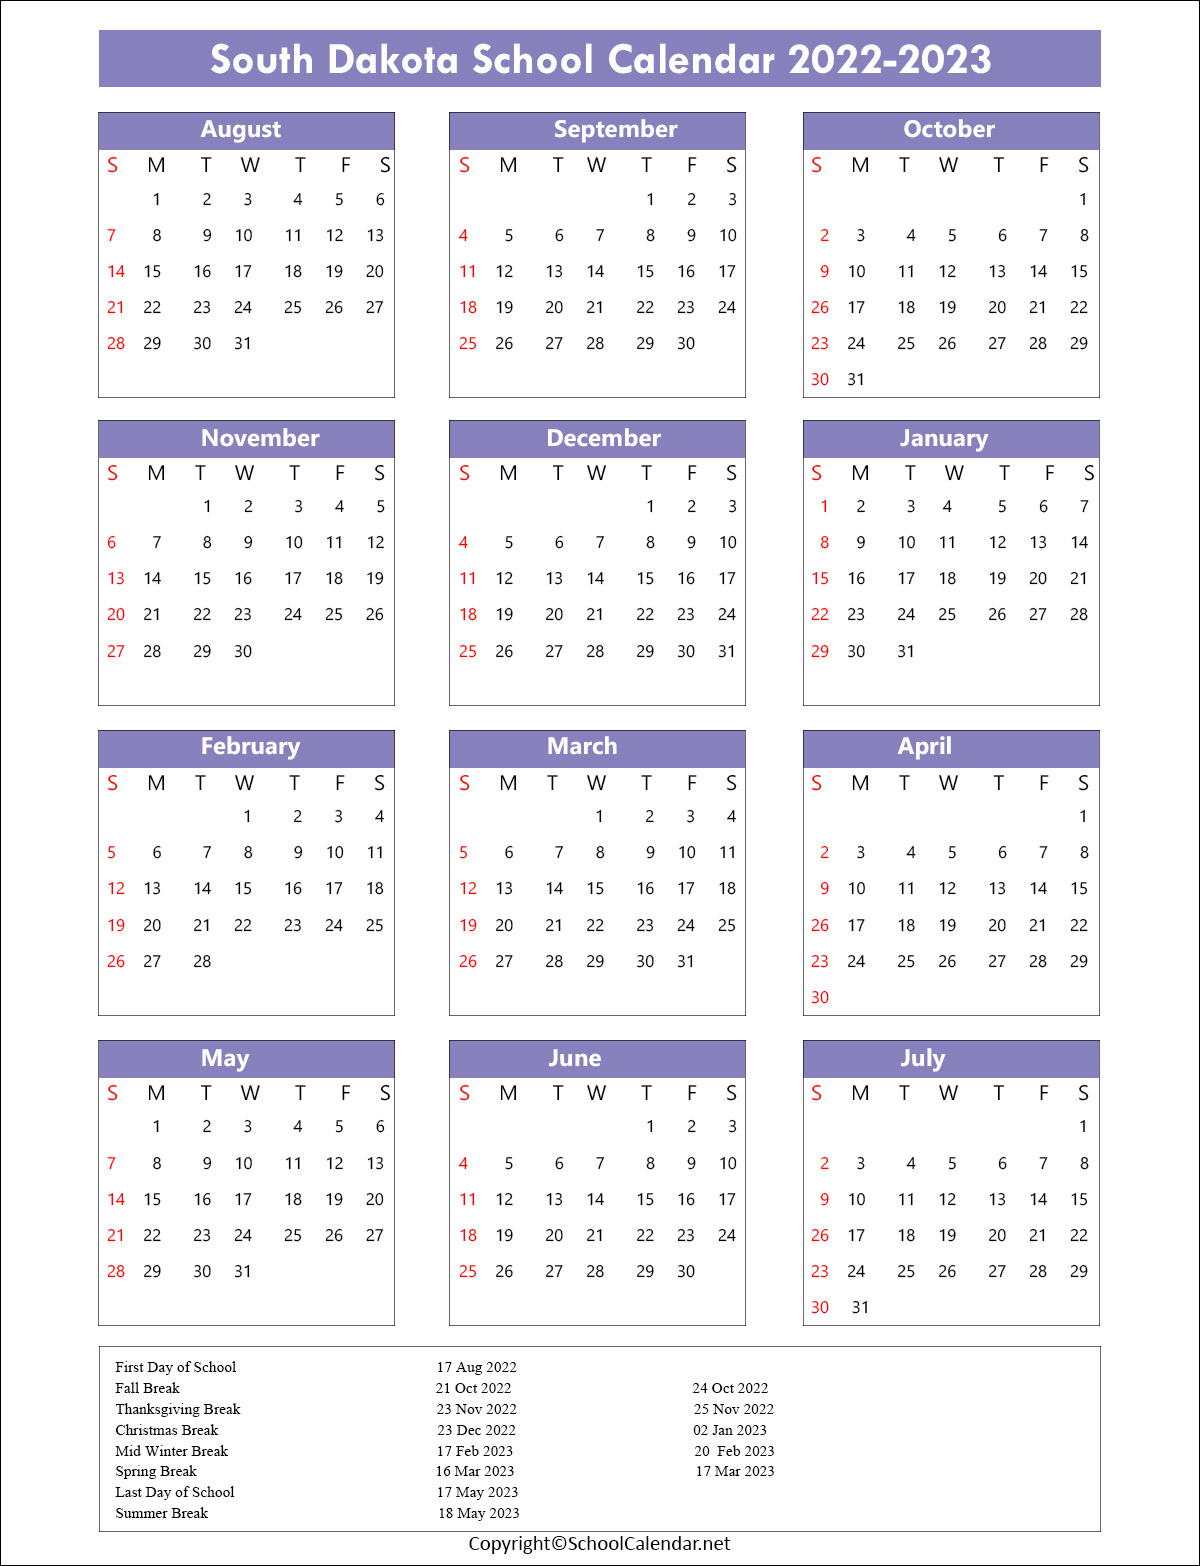 South-Dakota School Calendar 2022